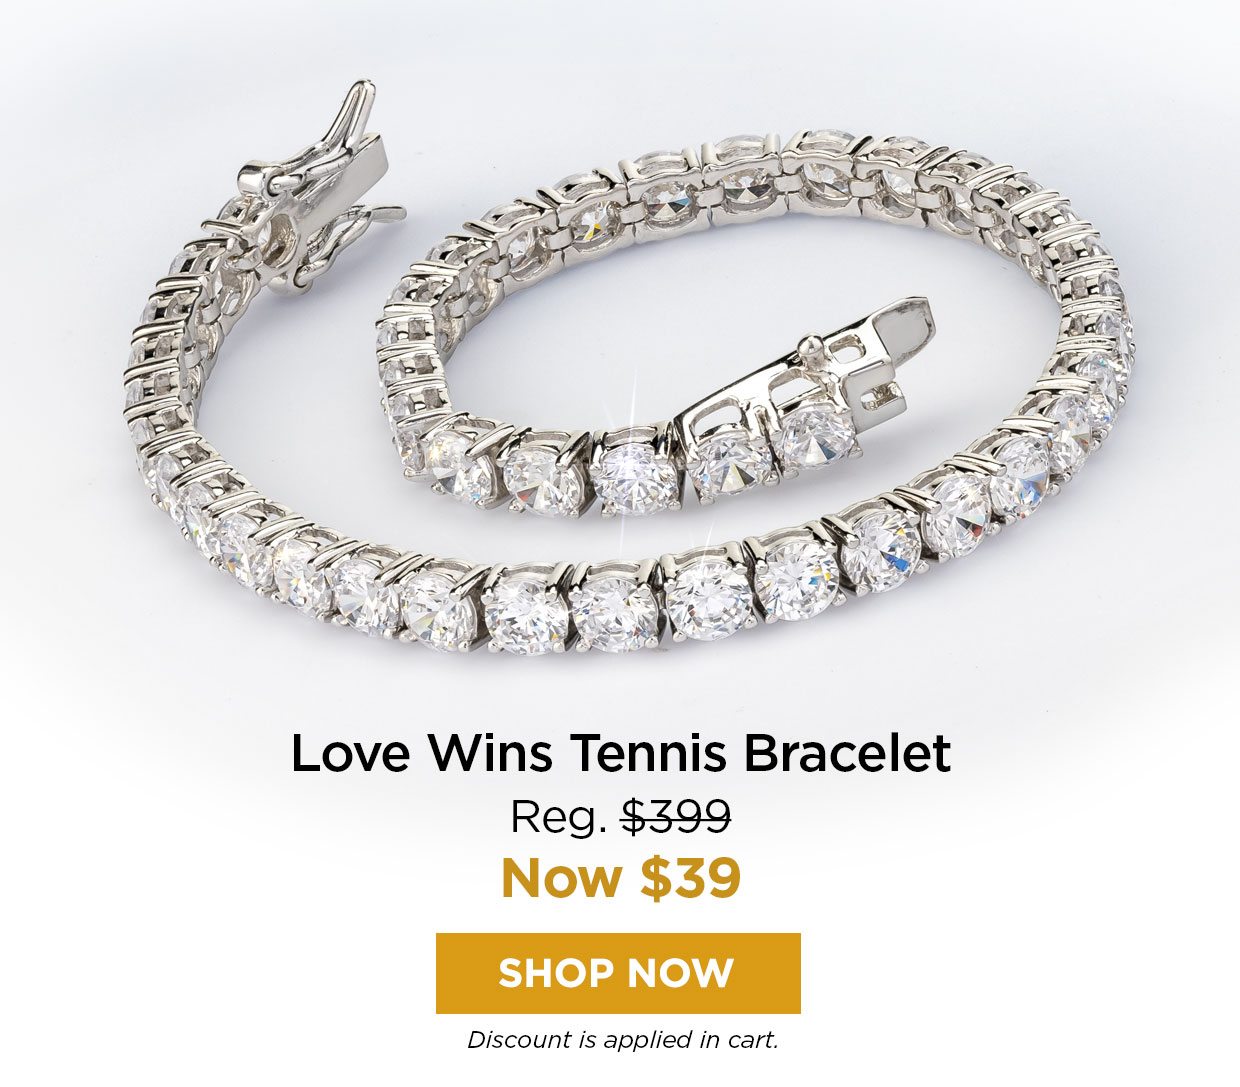 Love Wins Tennis Bracelet Reg. $399, Now $39. Shop Now button. Discount applied in cart. 